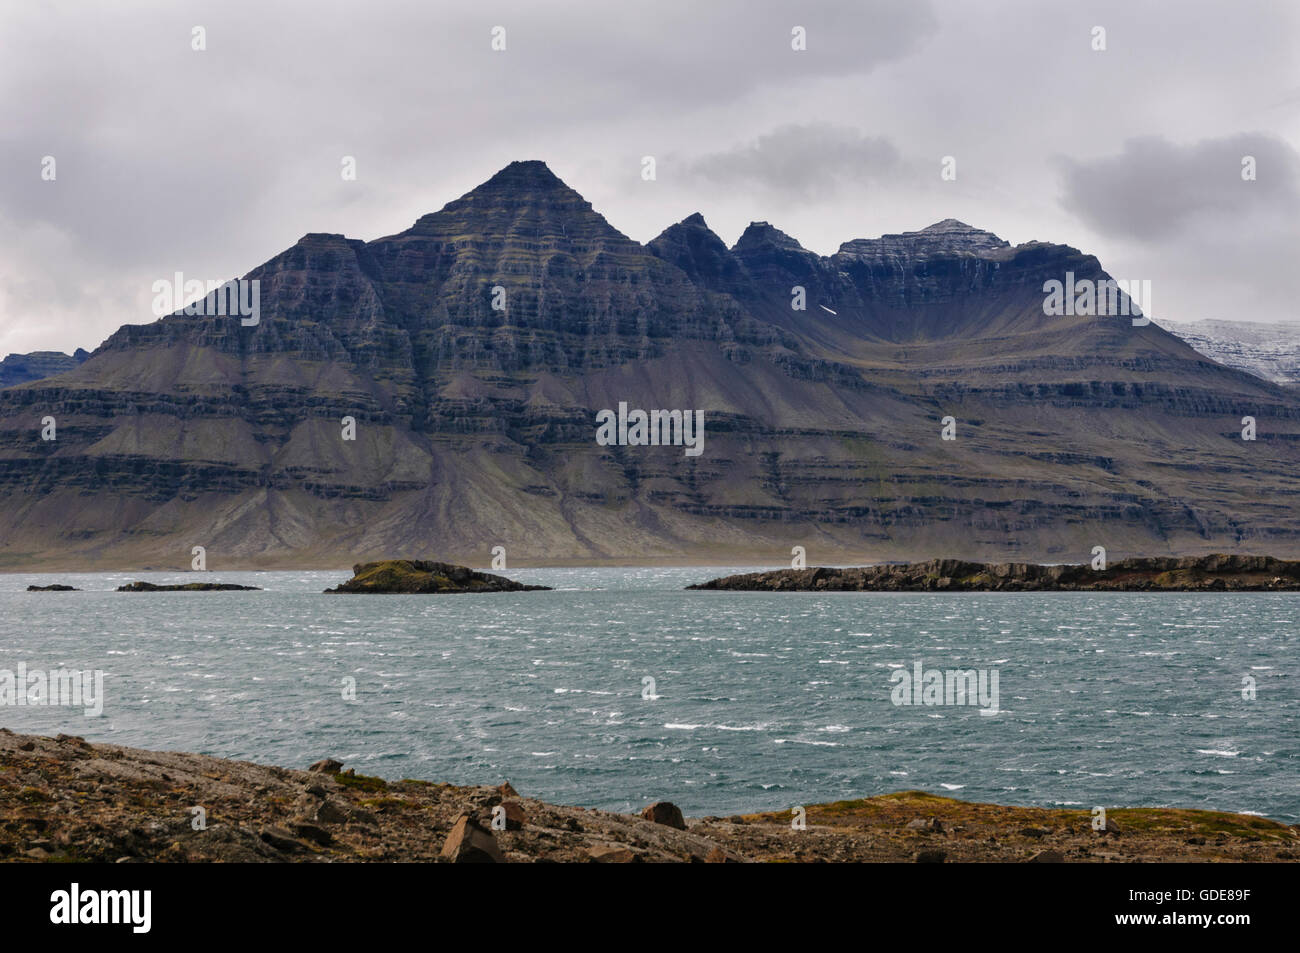 Der pyramidenförmige Berg Bulandstindur im Fjord Berufjördur in Ost-Island. Stockfoto